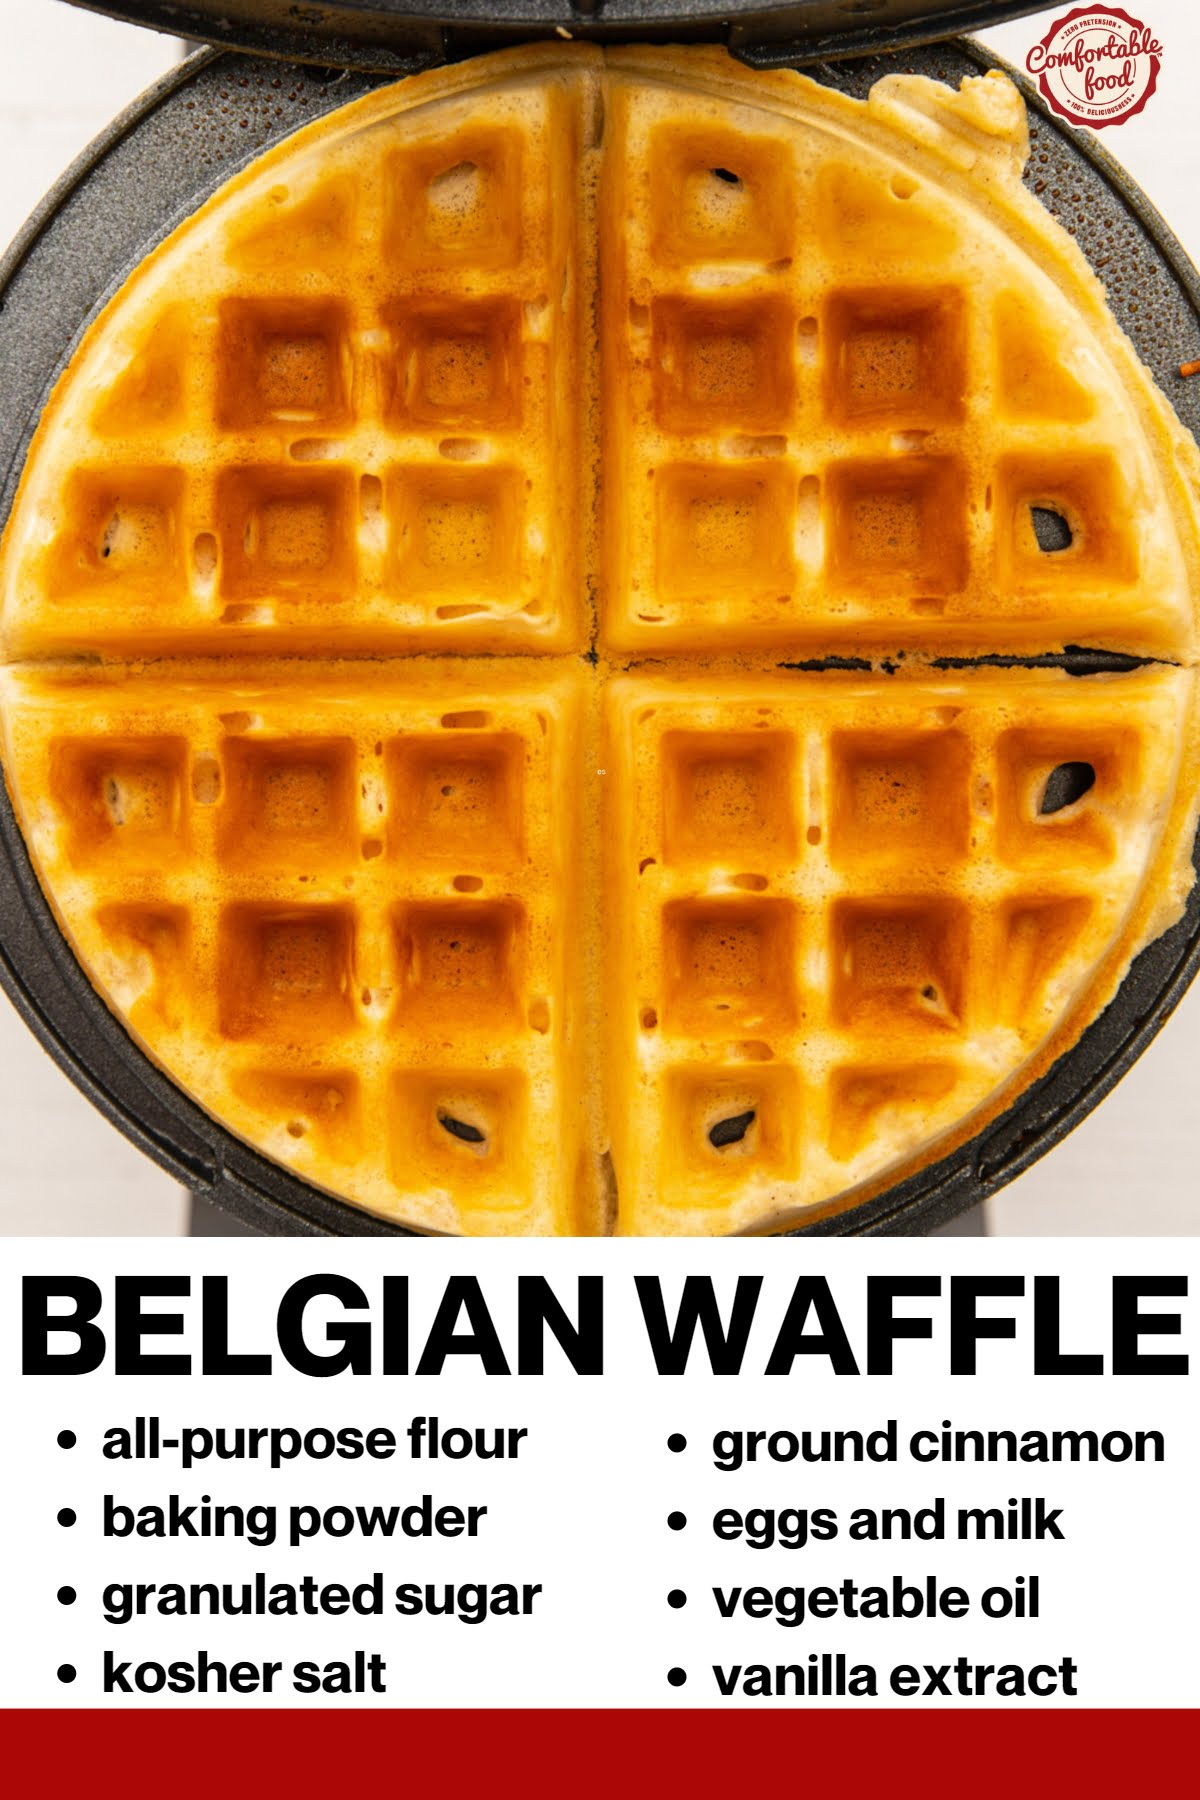 Belgian waffle - socilas